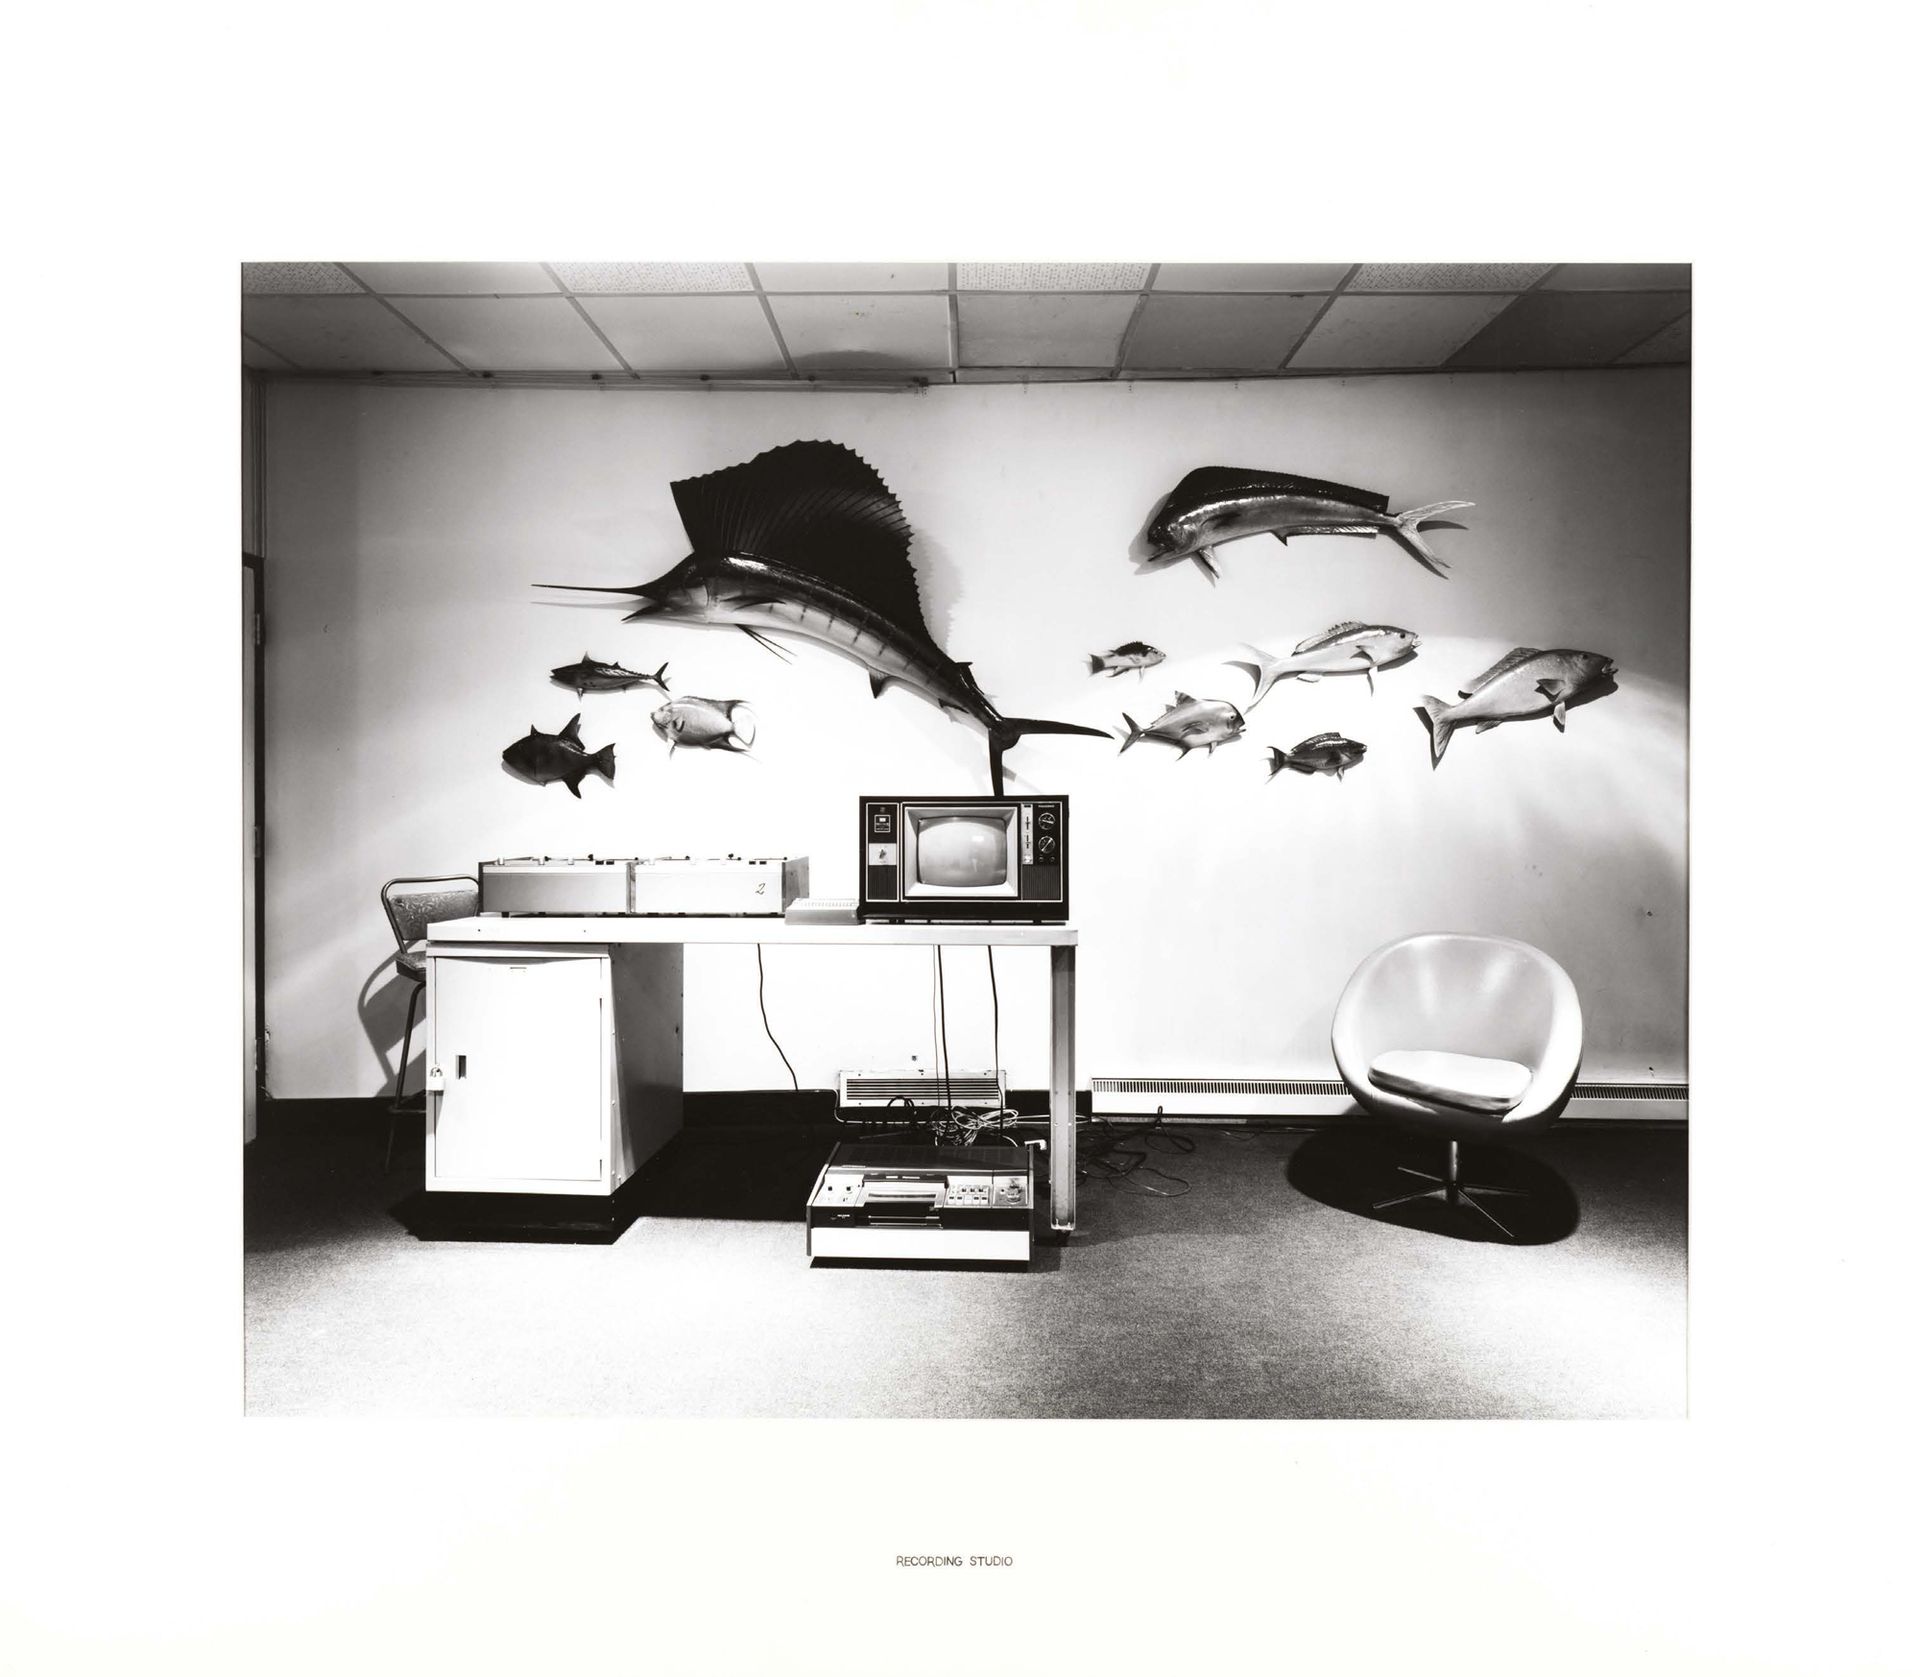 LYNNE COHEN (1944-2014) 录音室
黑白照片打印。
出自20册的版本。
黑白照片打印。

高_71厘米，宽_82厘米
出处：
- Samia&hellip;